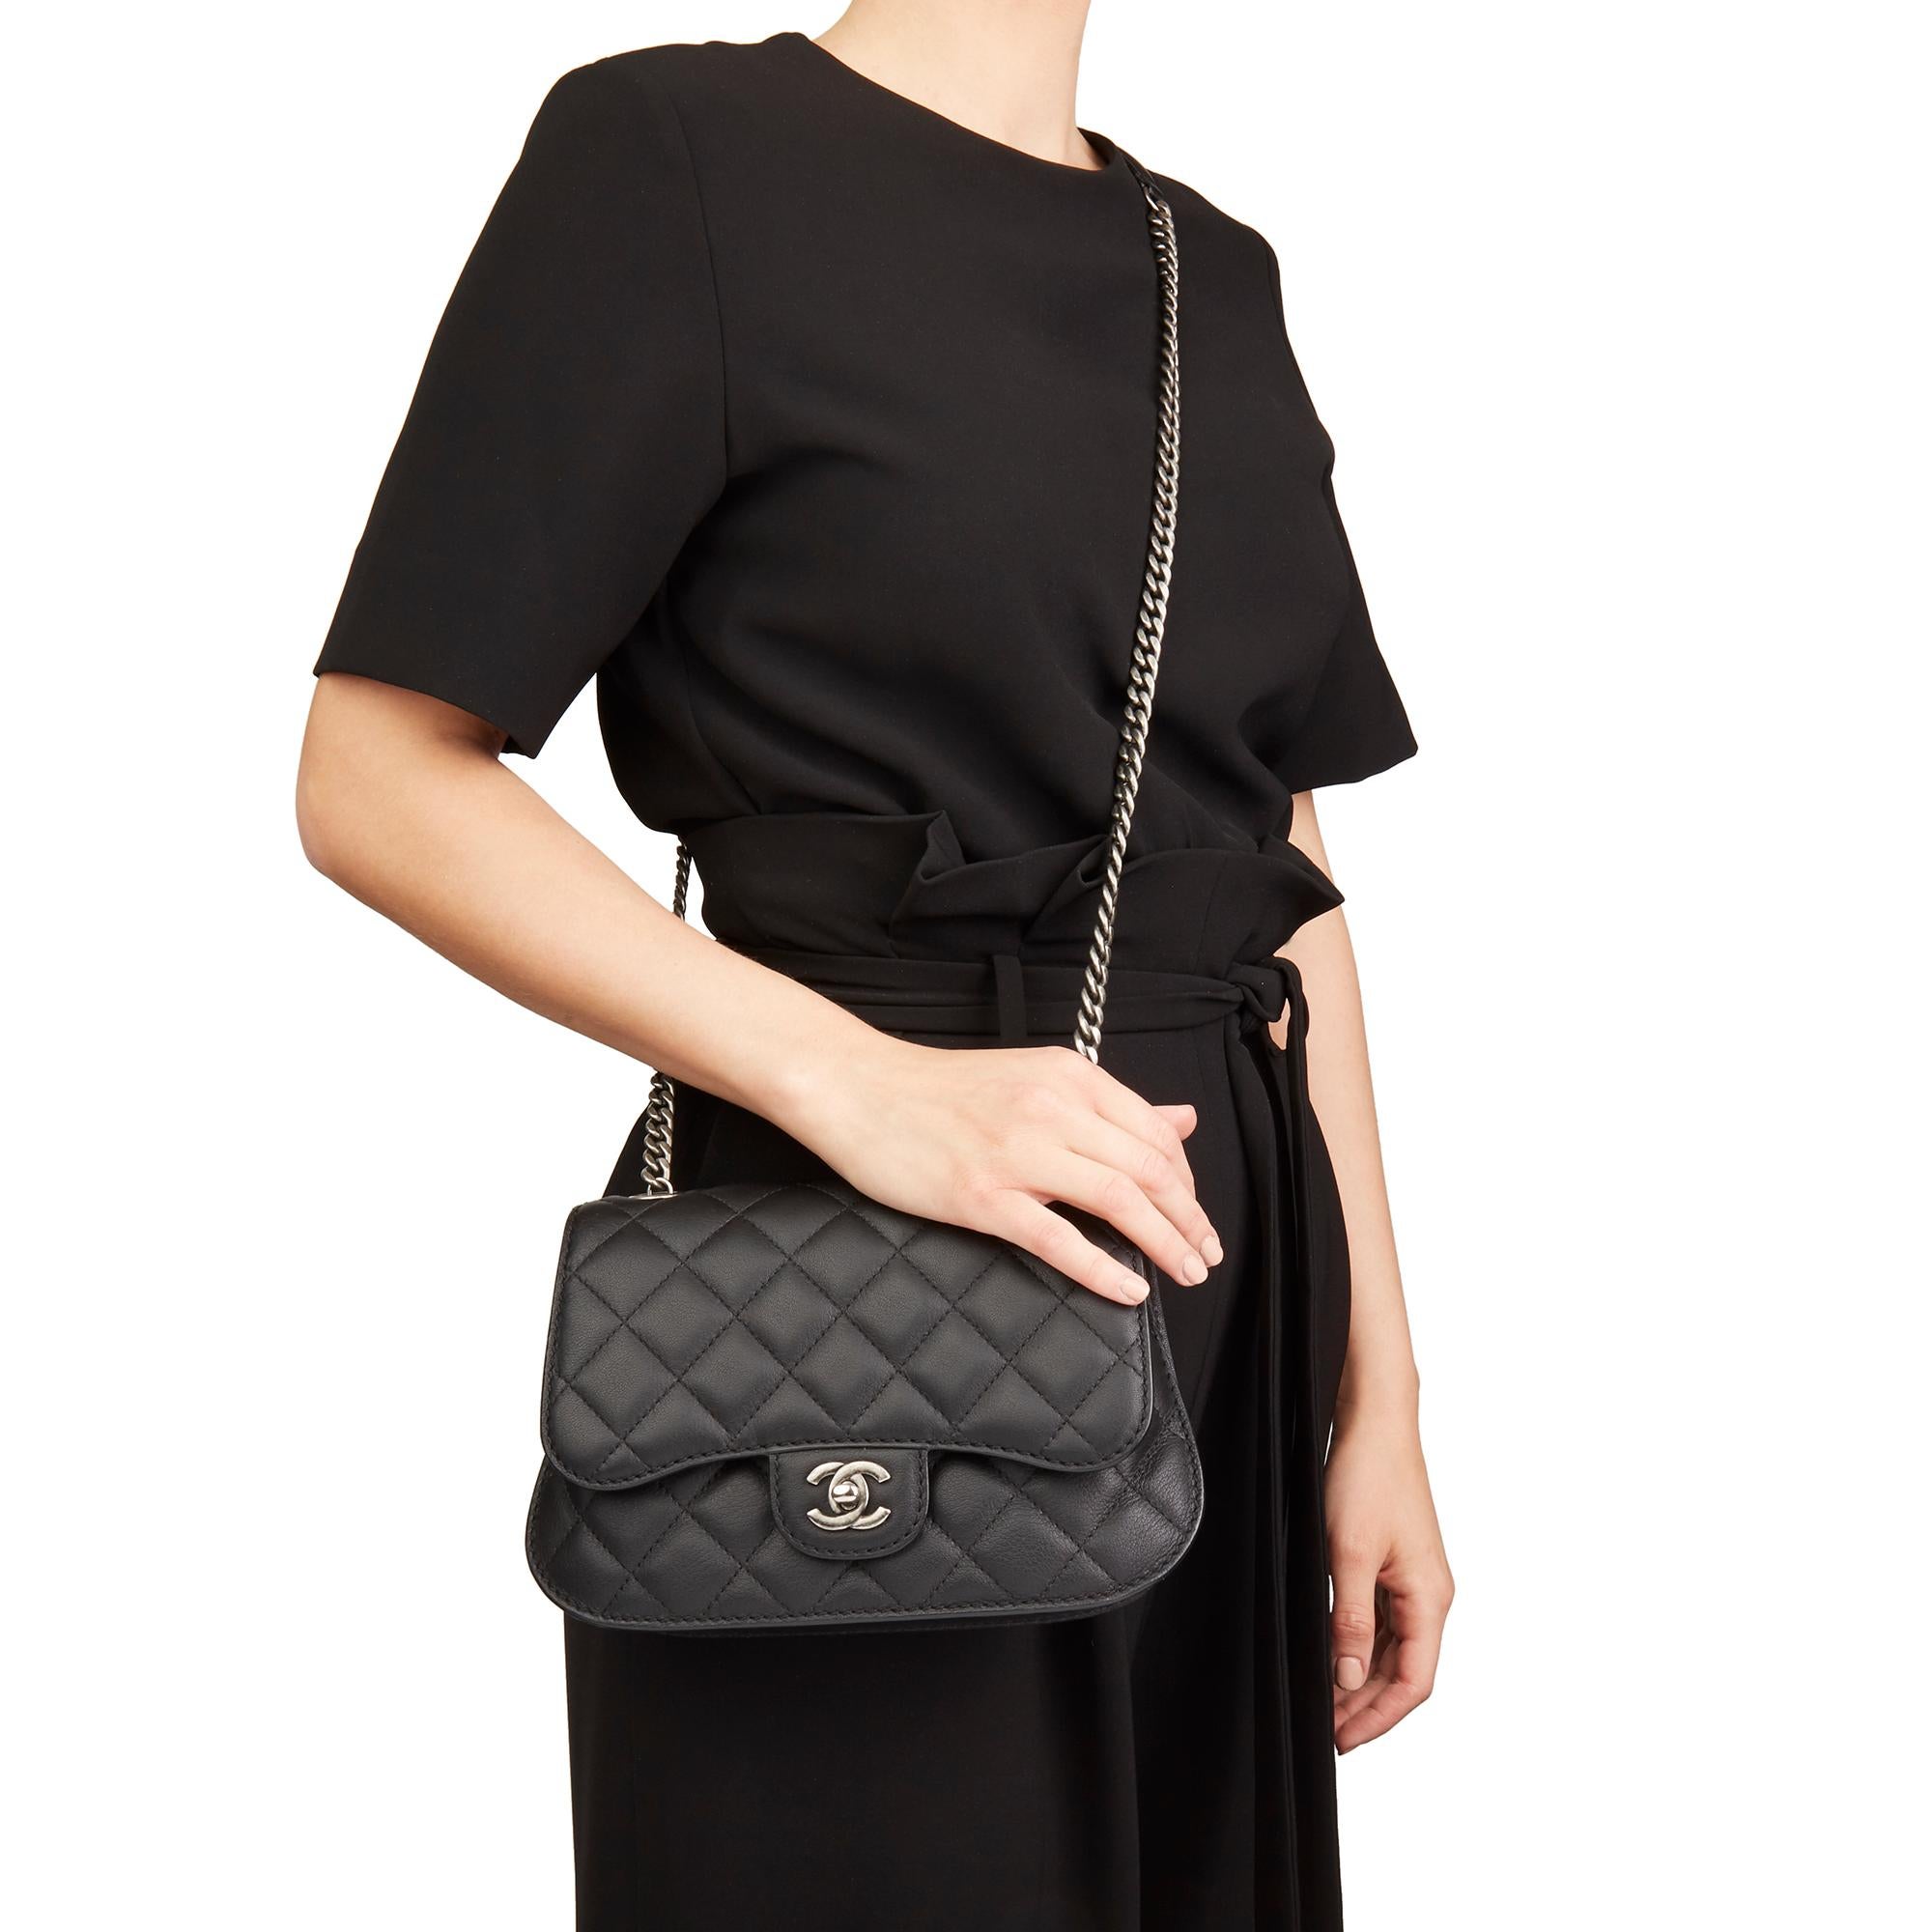 2017 Chanel Black Quilted Calfskin Leather Saddle Bag 6